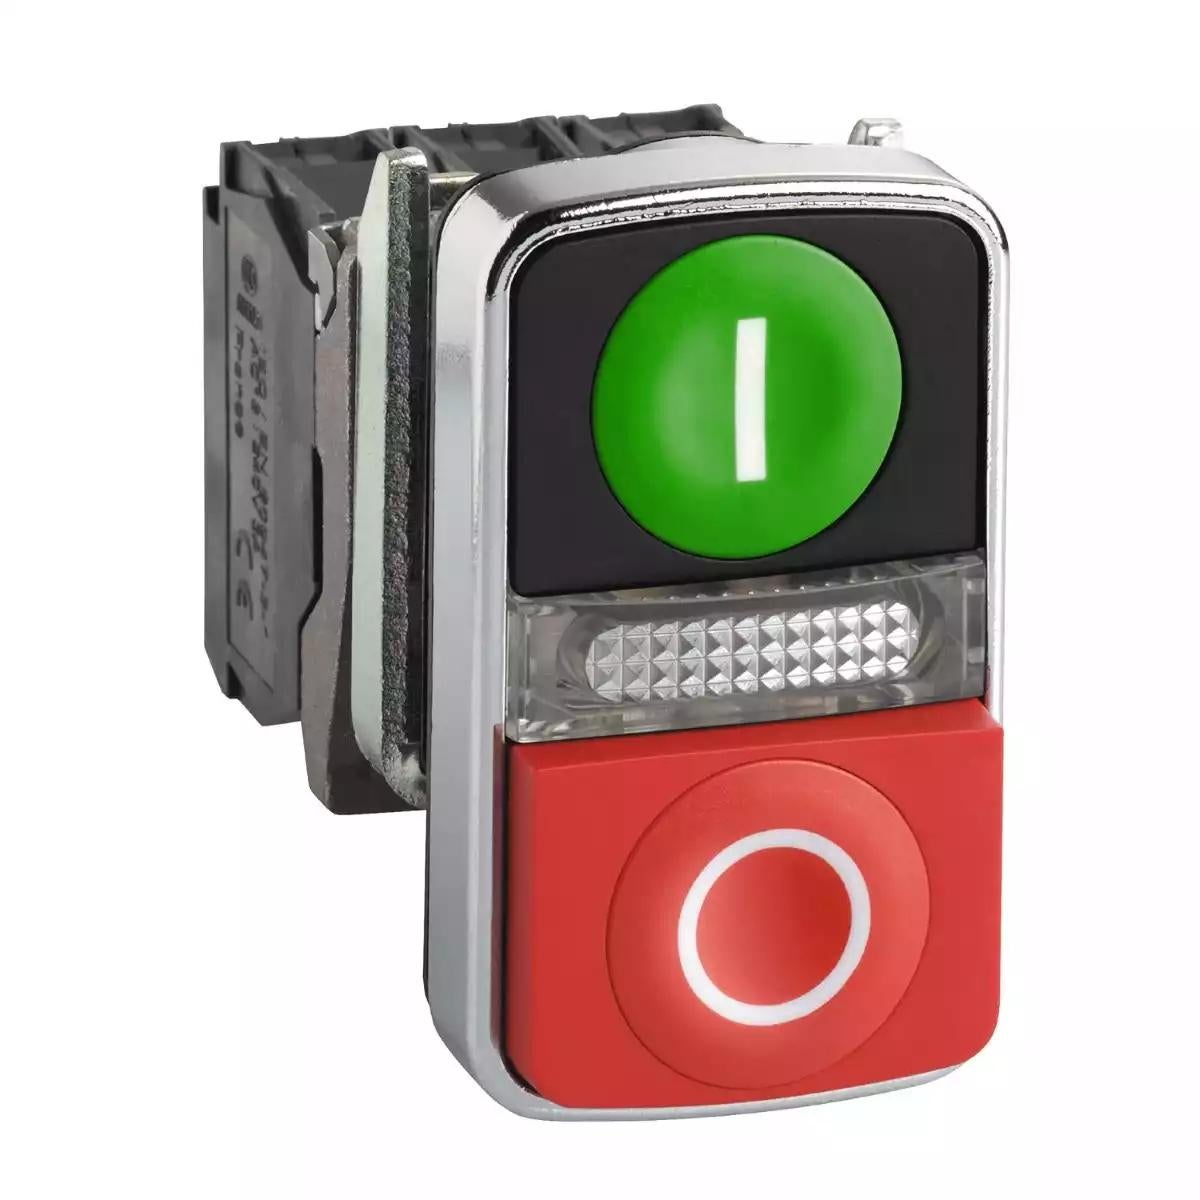 Harmony XB4, Illuminated double-headed push button, metal, Ø22, 1 green flush I + 1 pilot light + 1 red projecting O, 240 V AC, 1 NO + 1 NC